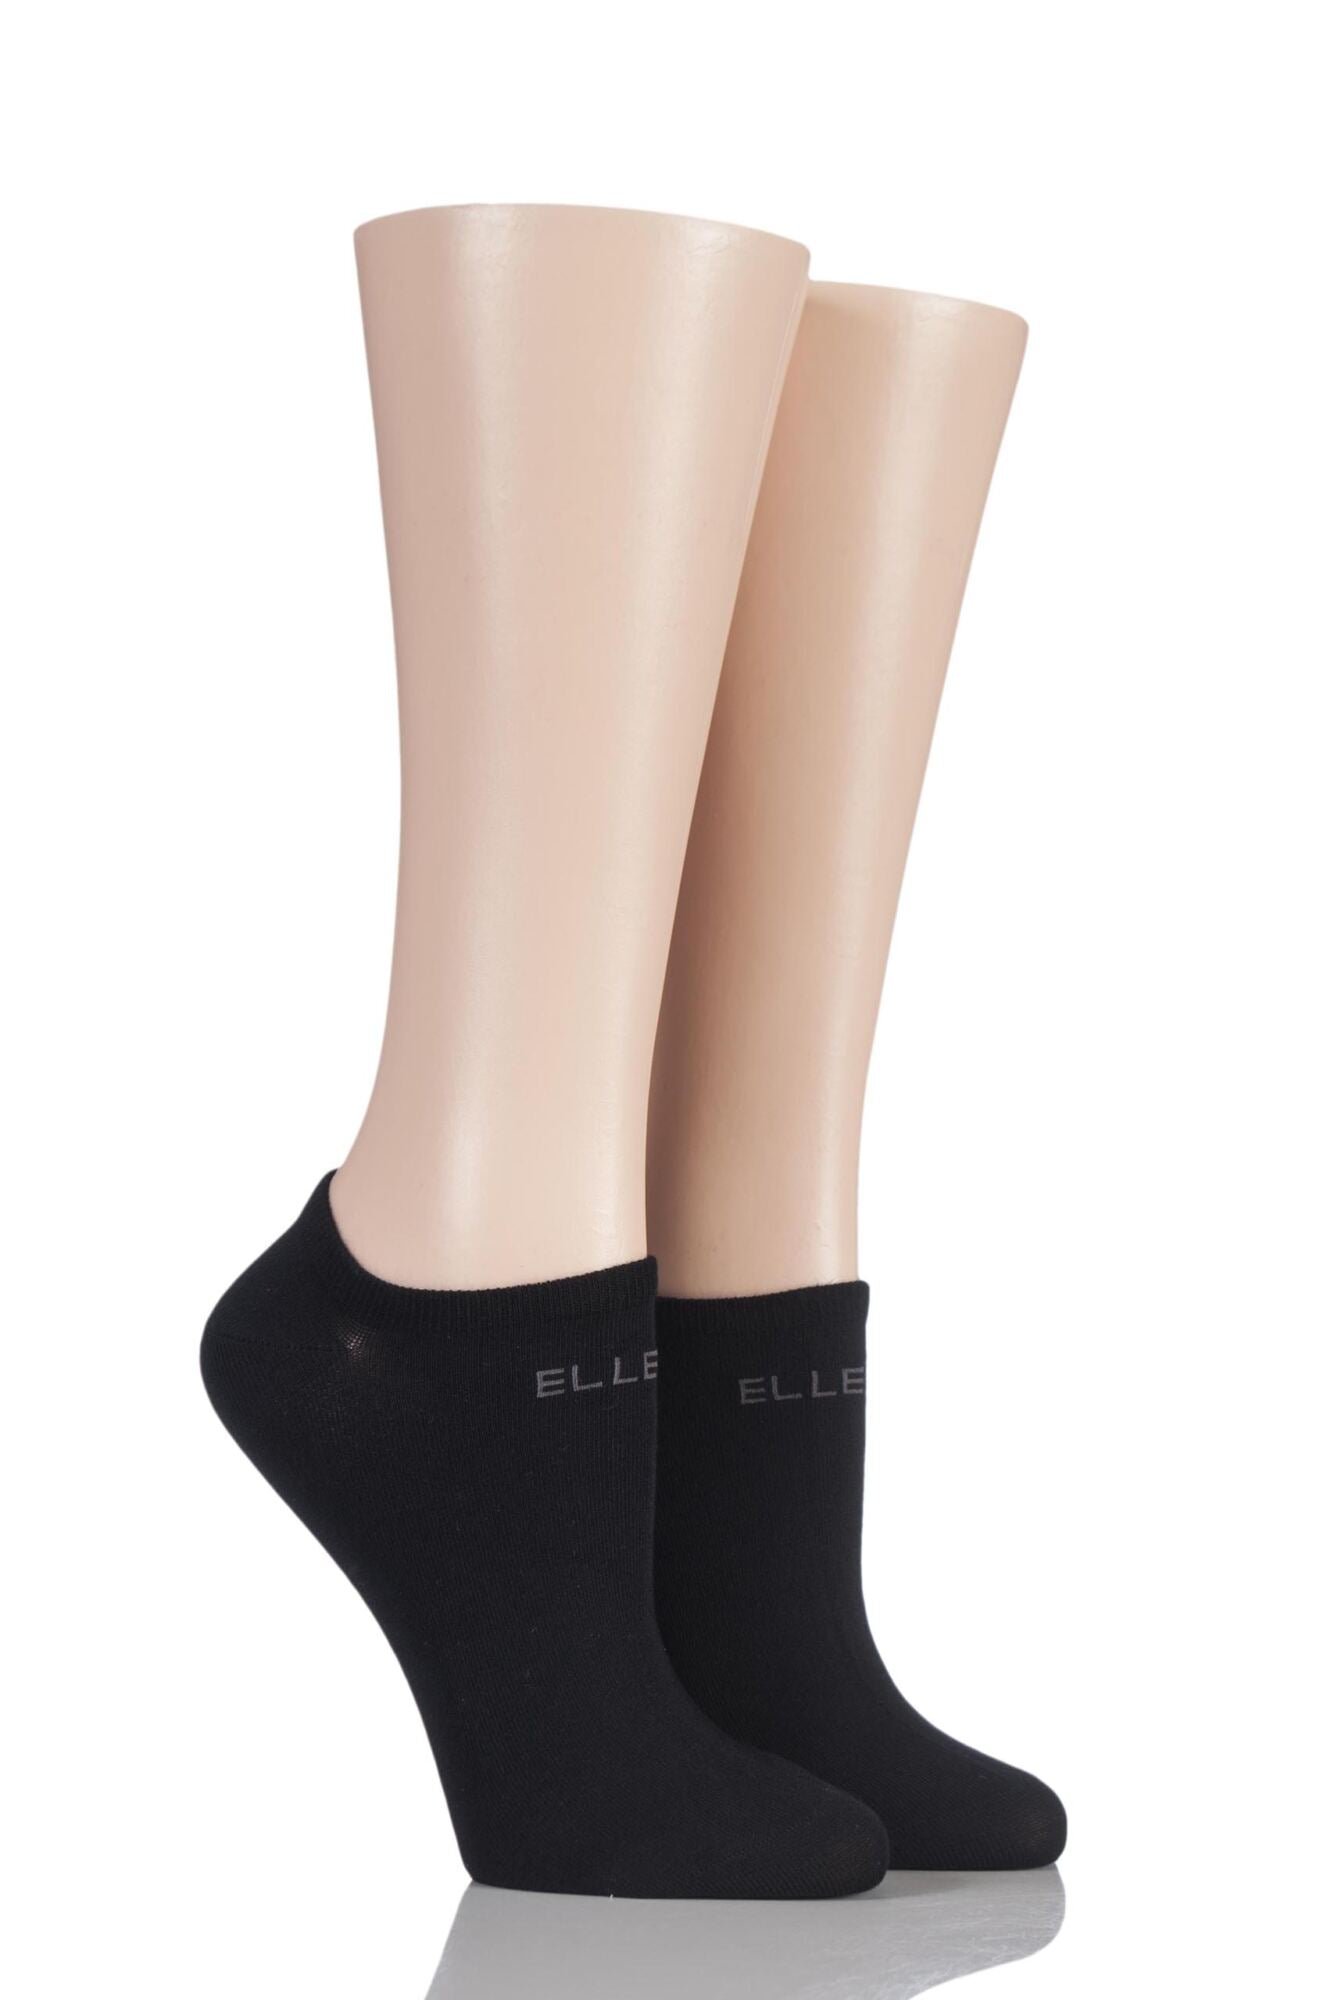 Elle-Bamboo No-Show Socks-Black